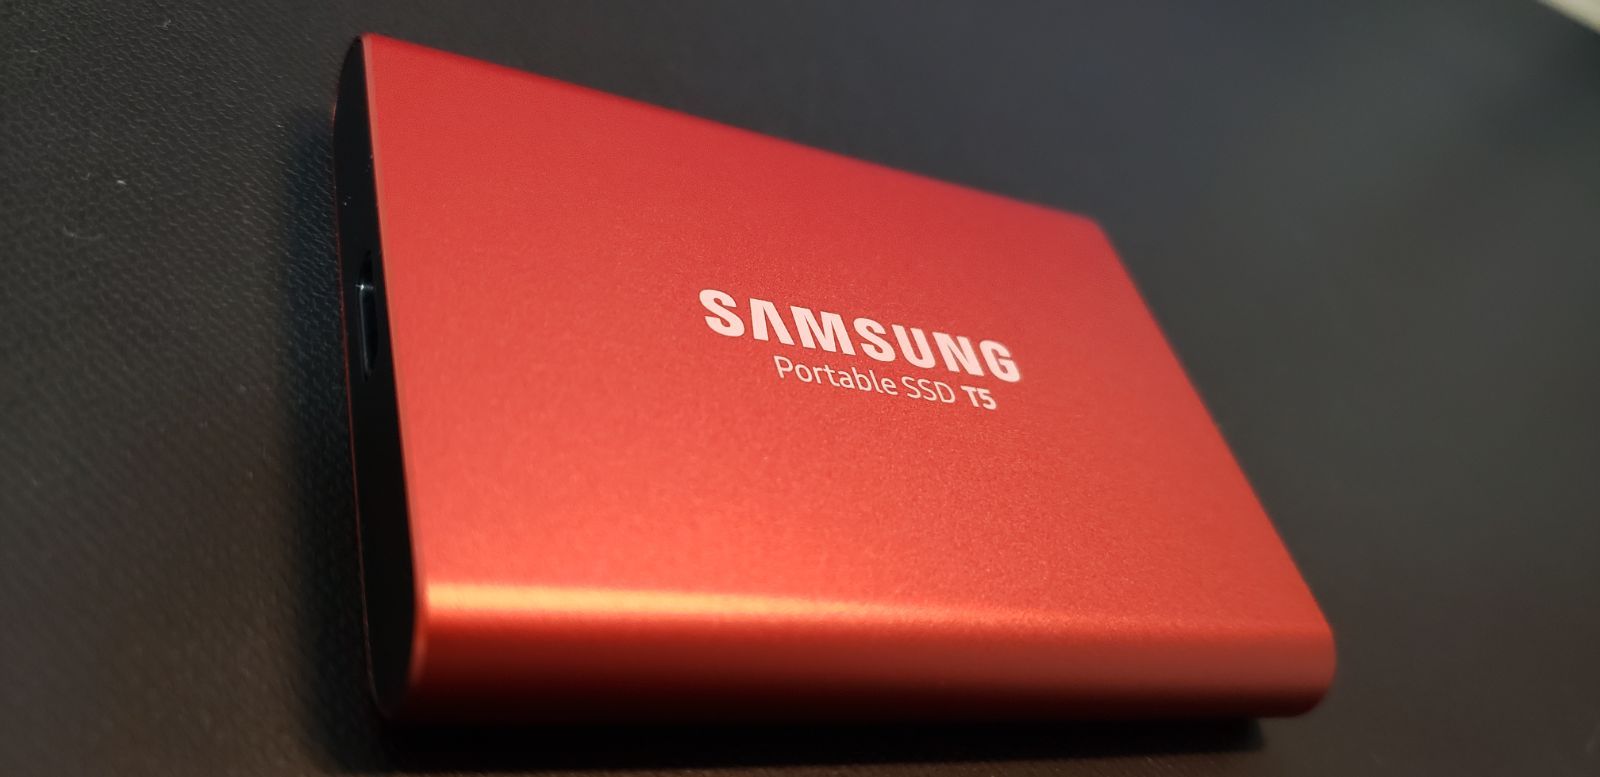 Samsung 外付けSSD T5 500GB USB3.1 Gen2対応 - wonderwall - メルカリ